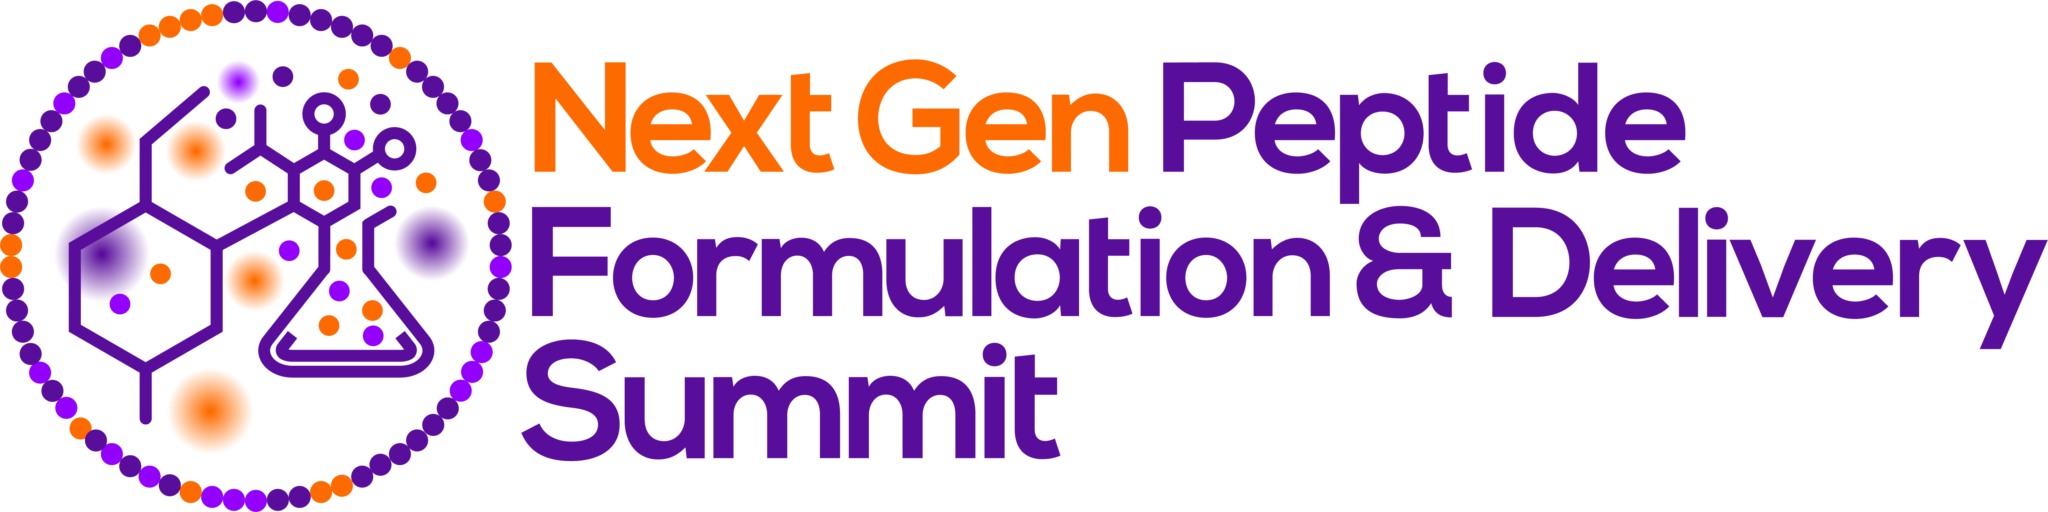 HW231201-34697-Next-Gen-Peptide-Formulation-Delivery-Summit-logo-FINAL-2048x512